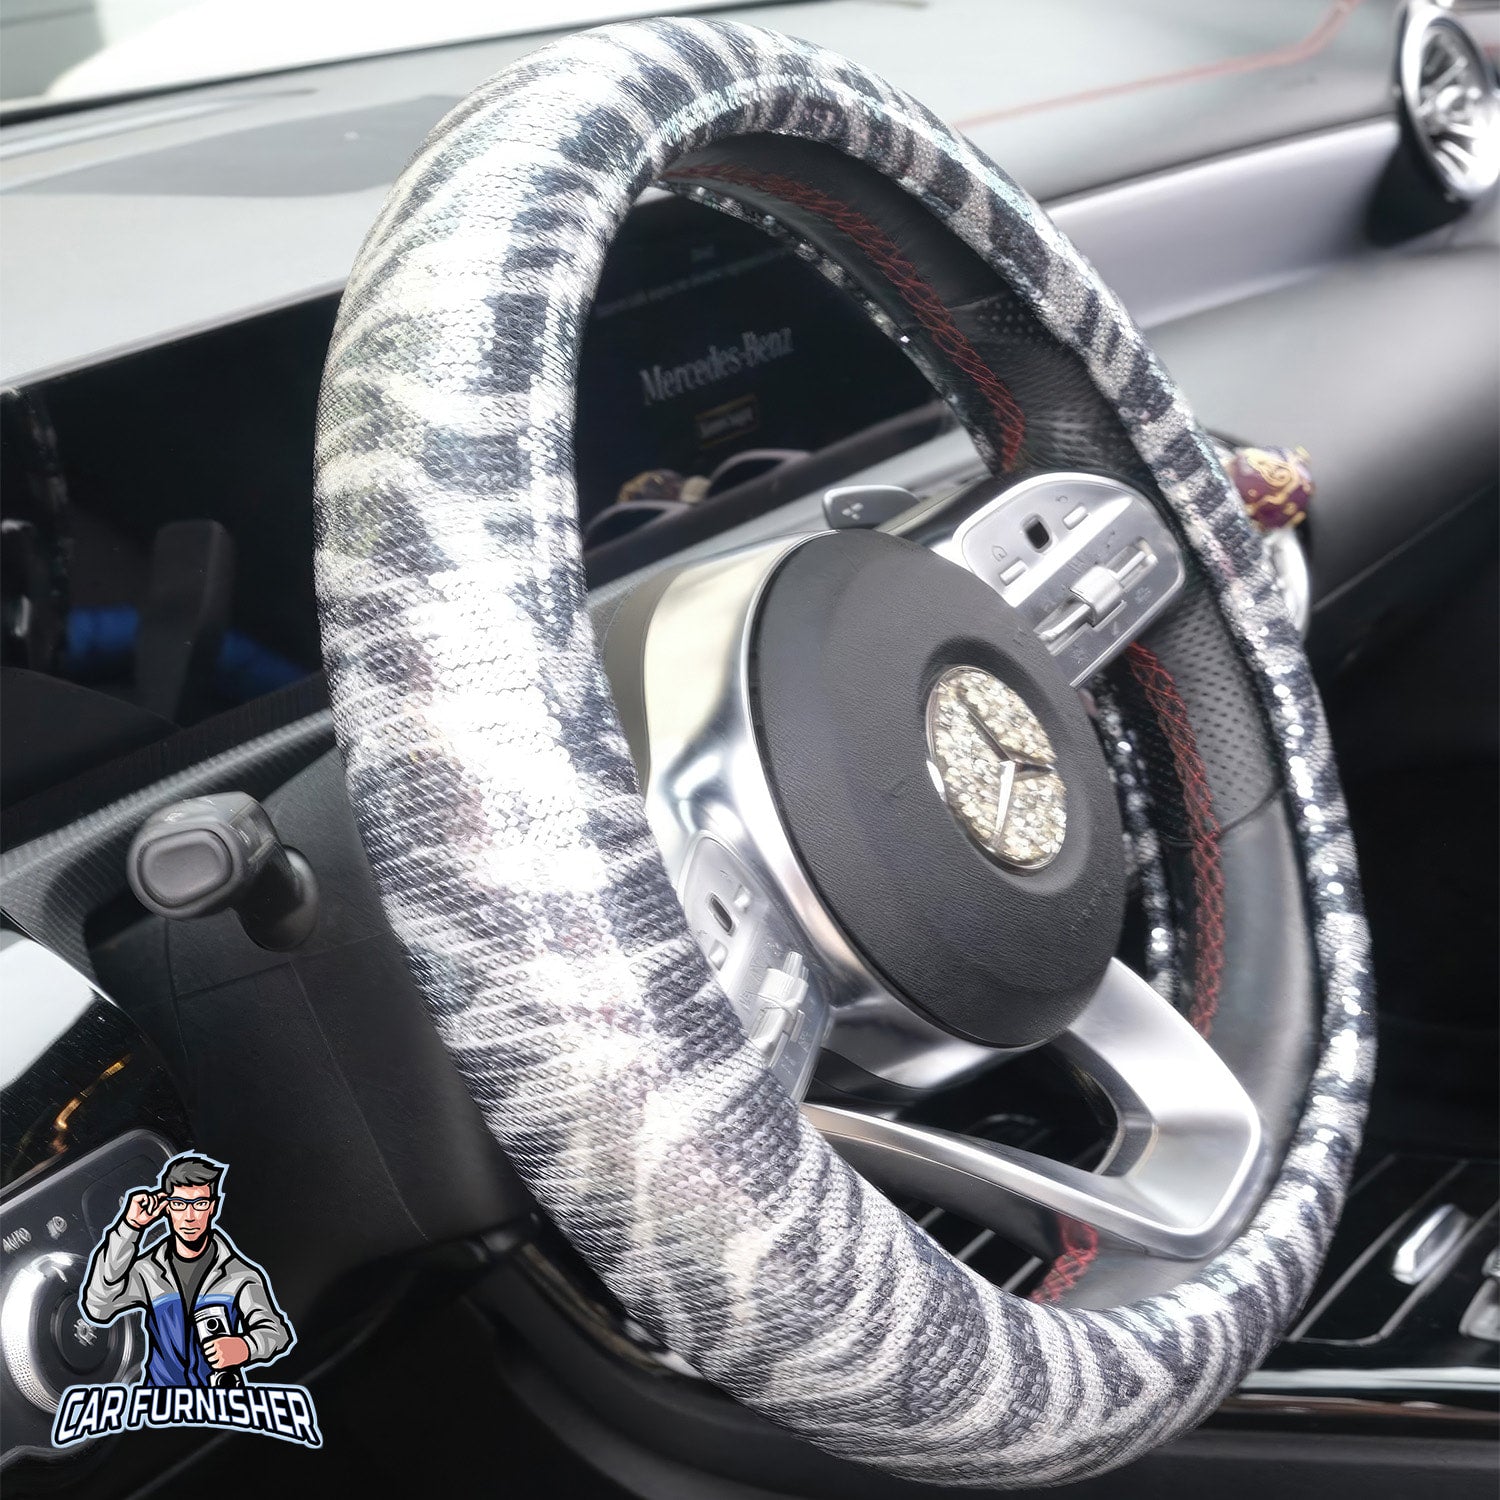 Steering Wheel Cover - Scally Scaled Design Zebra Fabric